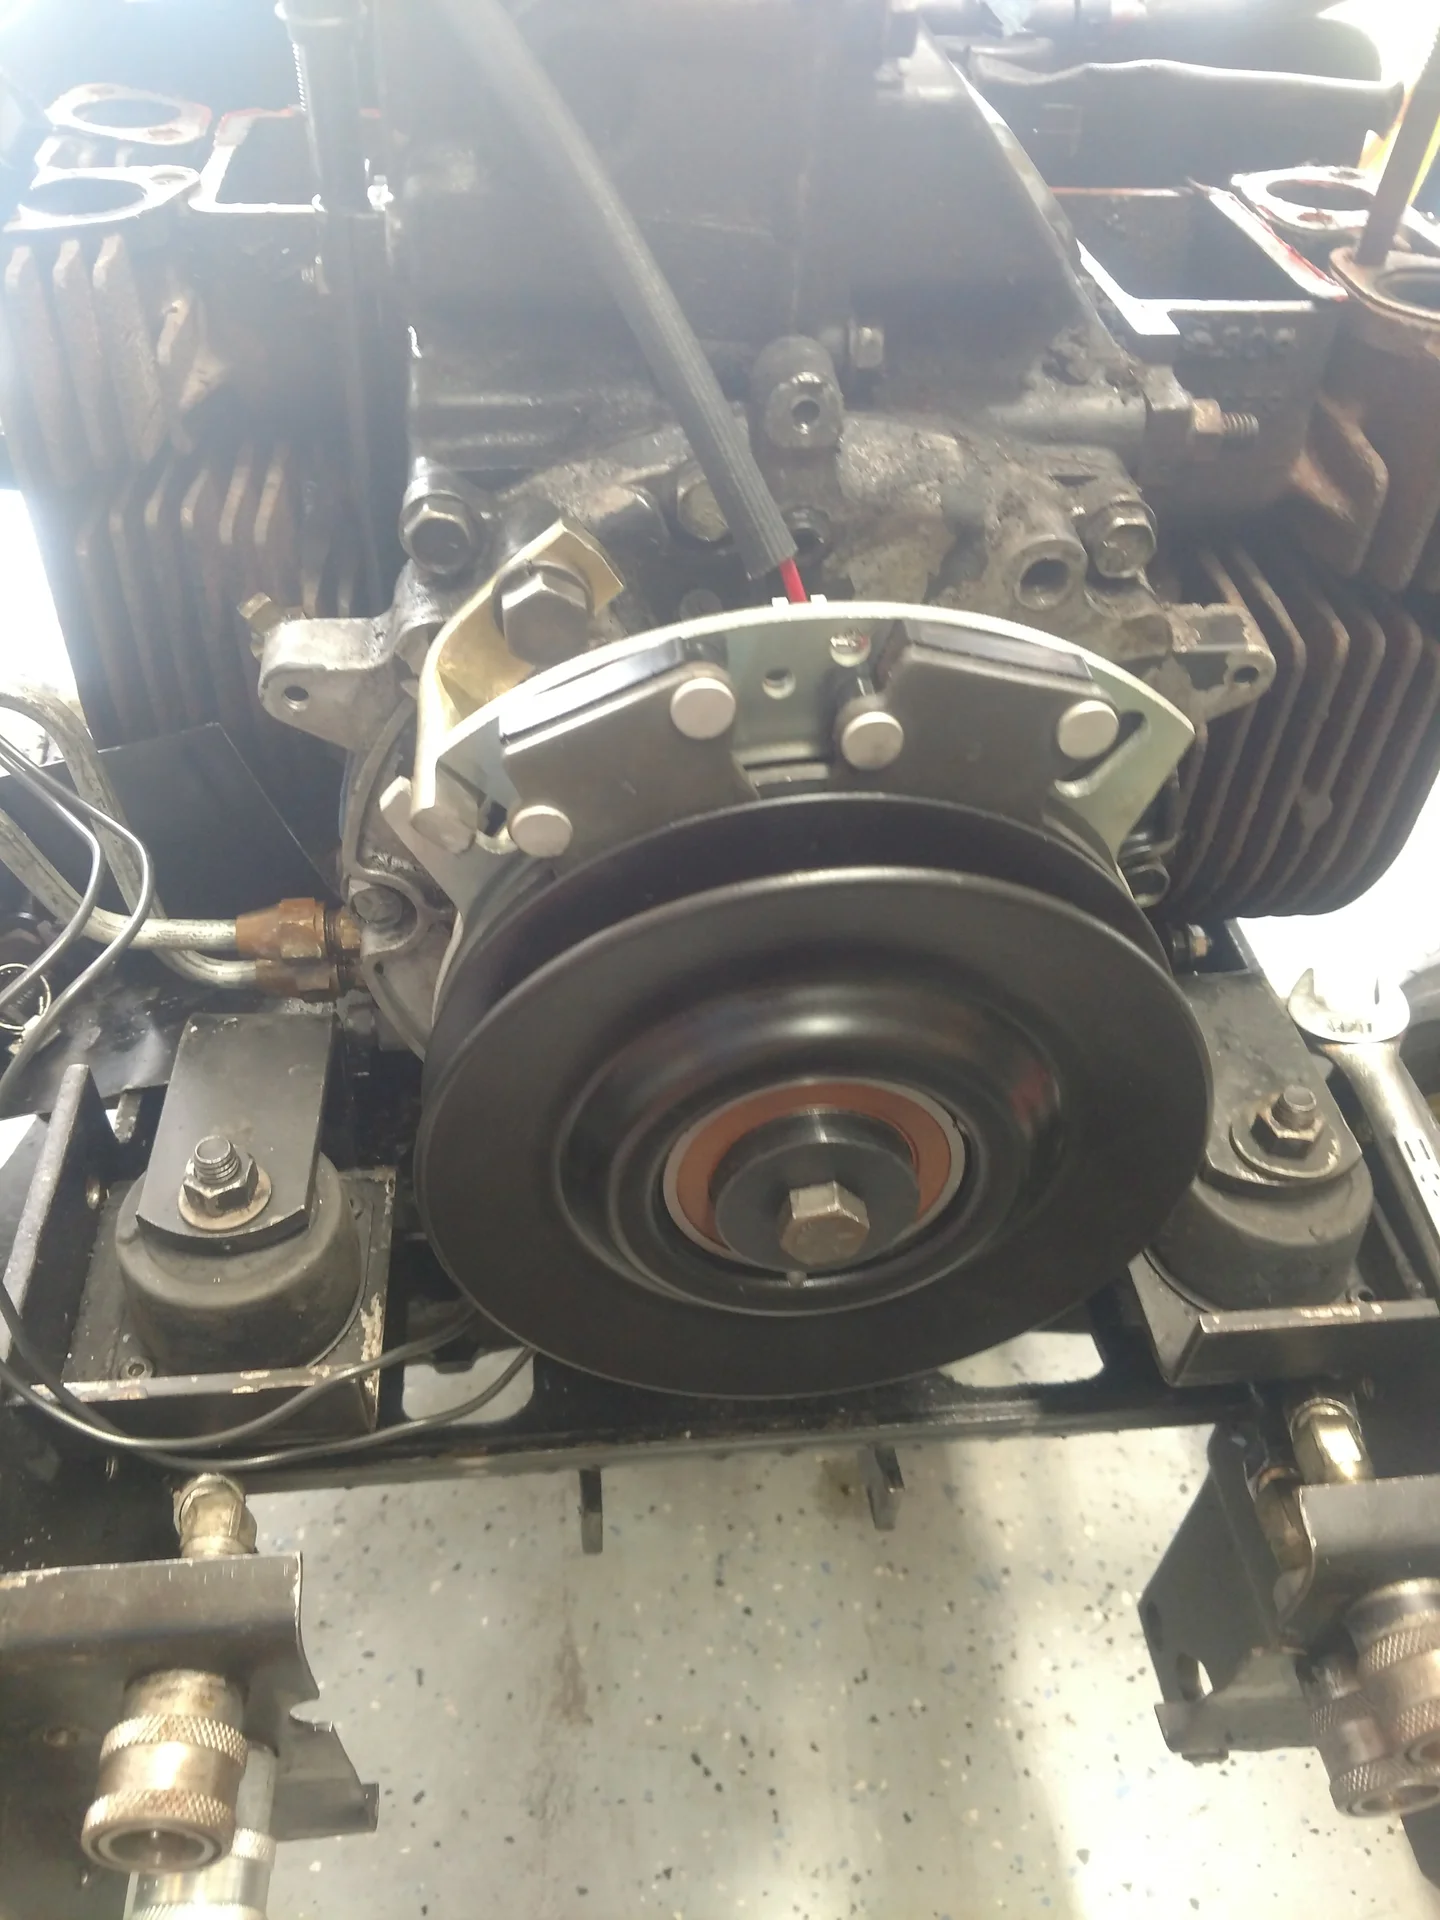 Kohler Engine Cranks But Won’t Start? Here’s How to Fix It